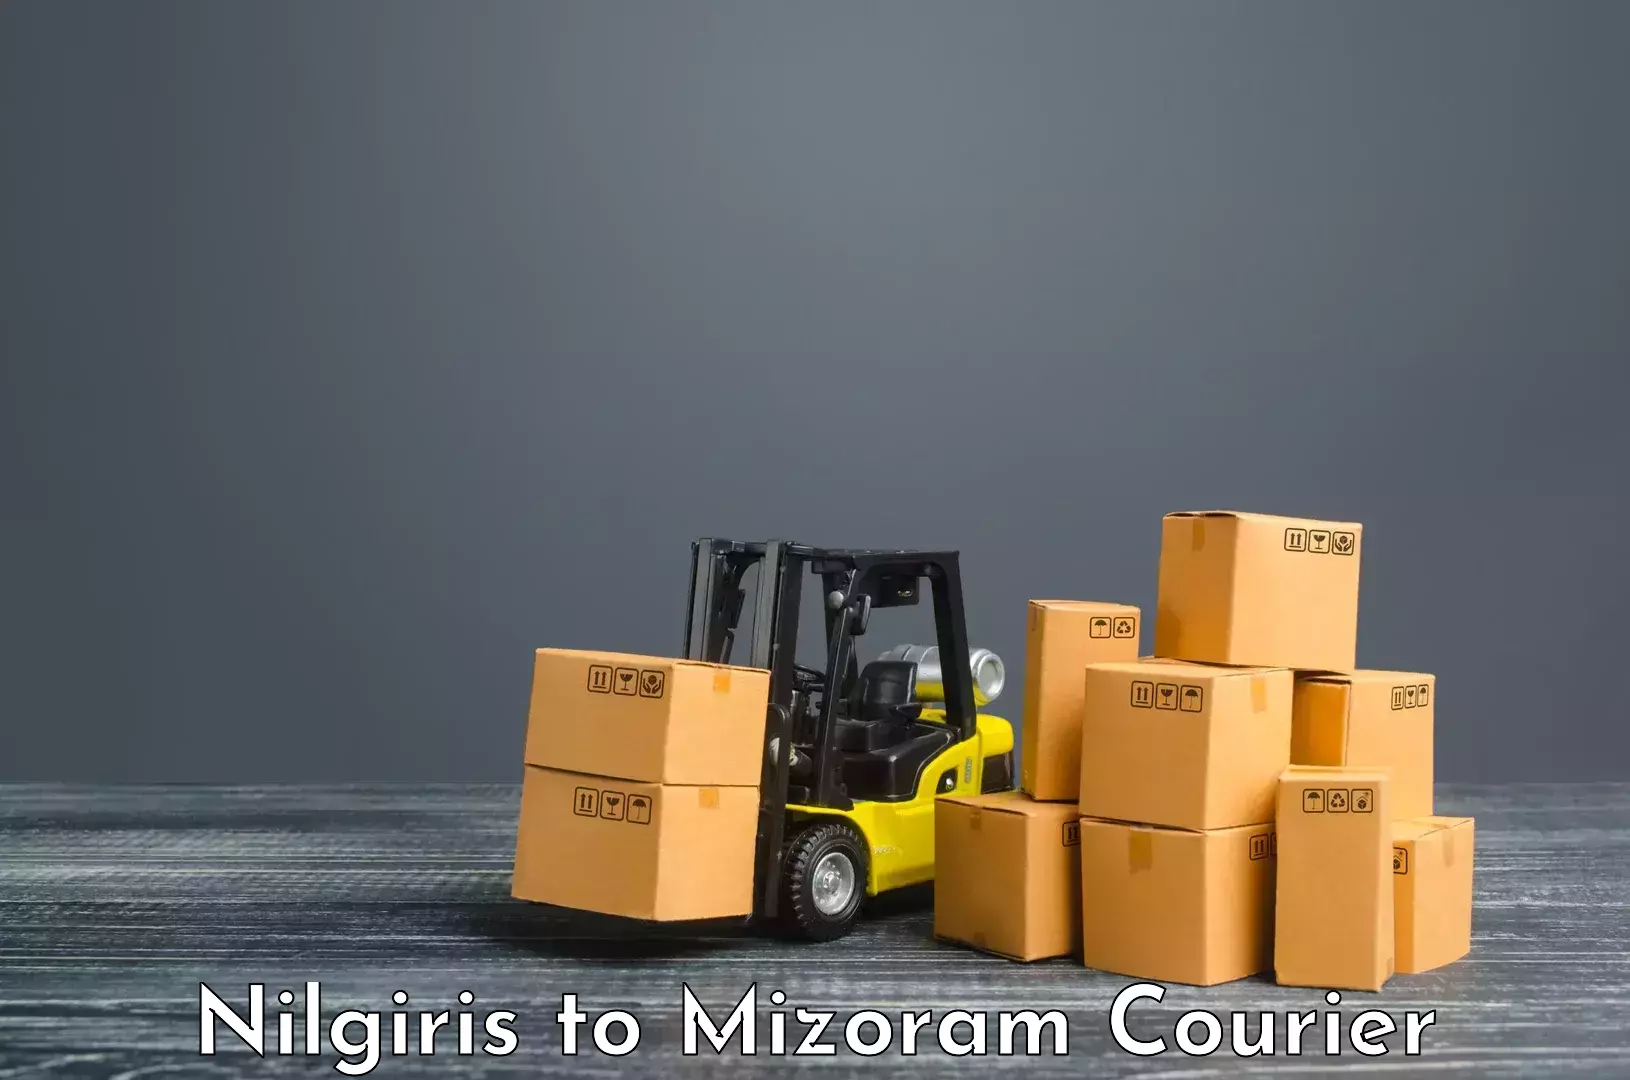 On-demand courier Nilgiris to Aizawl